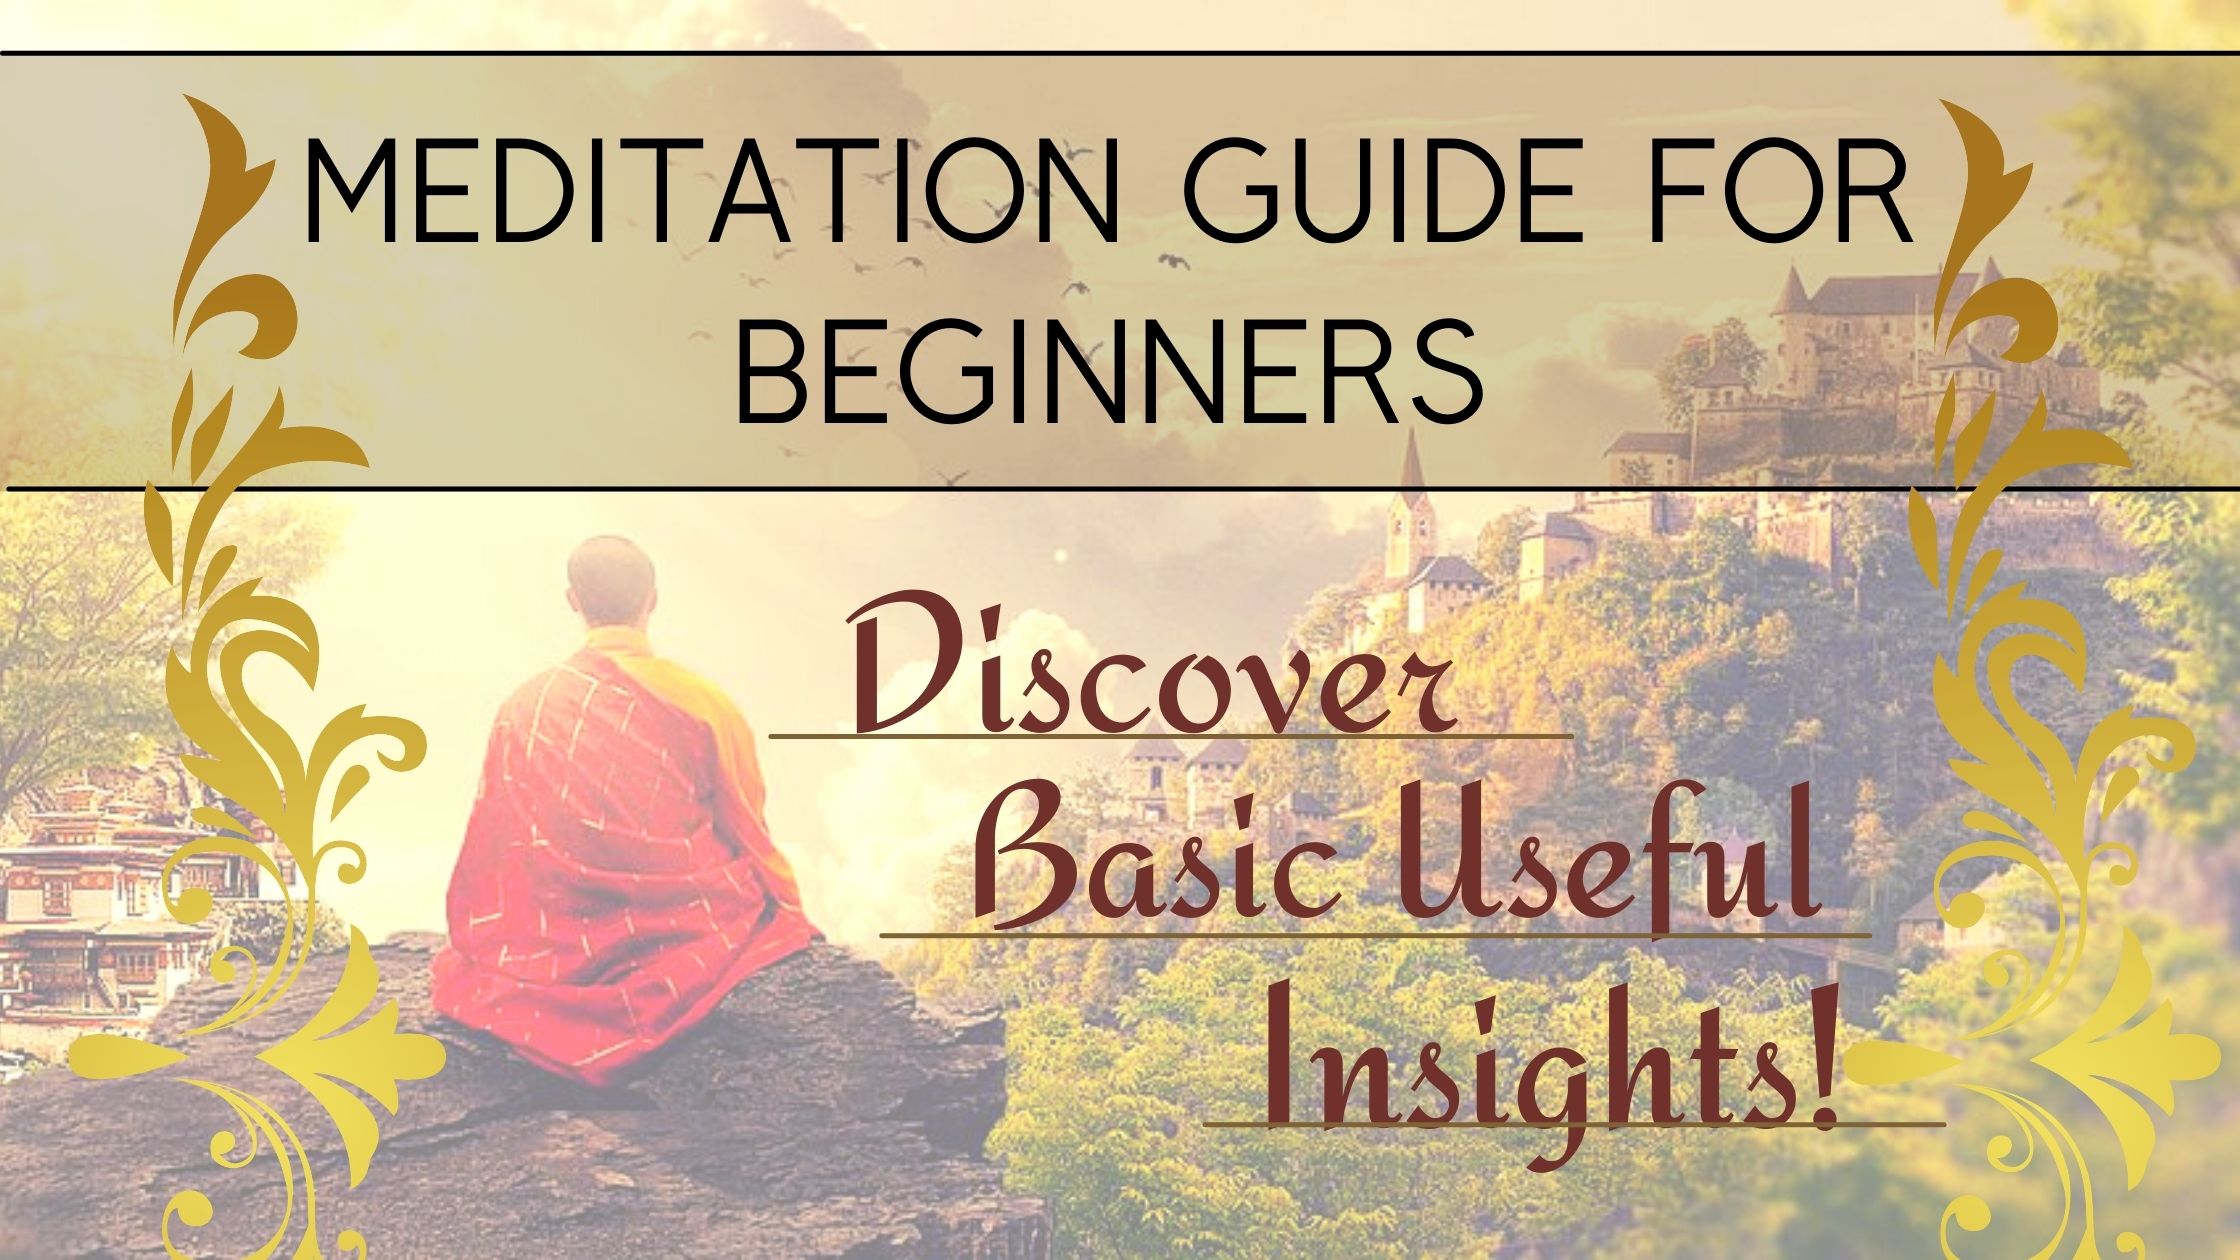 Meditation guide for beginners
